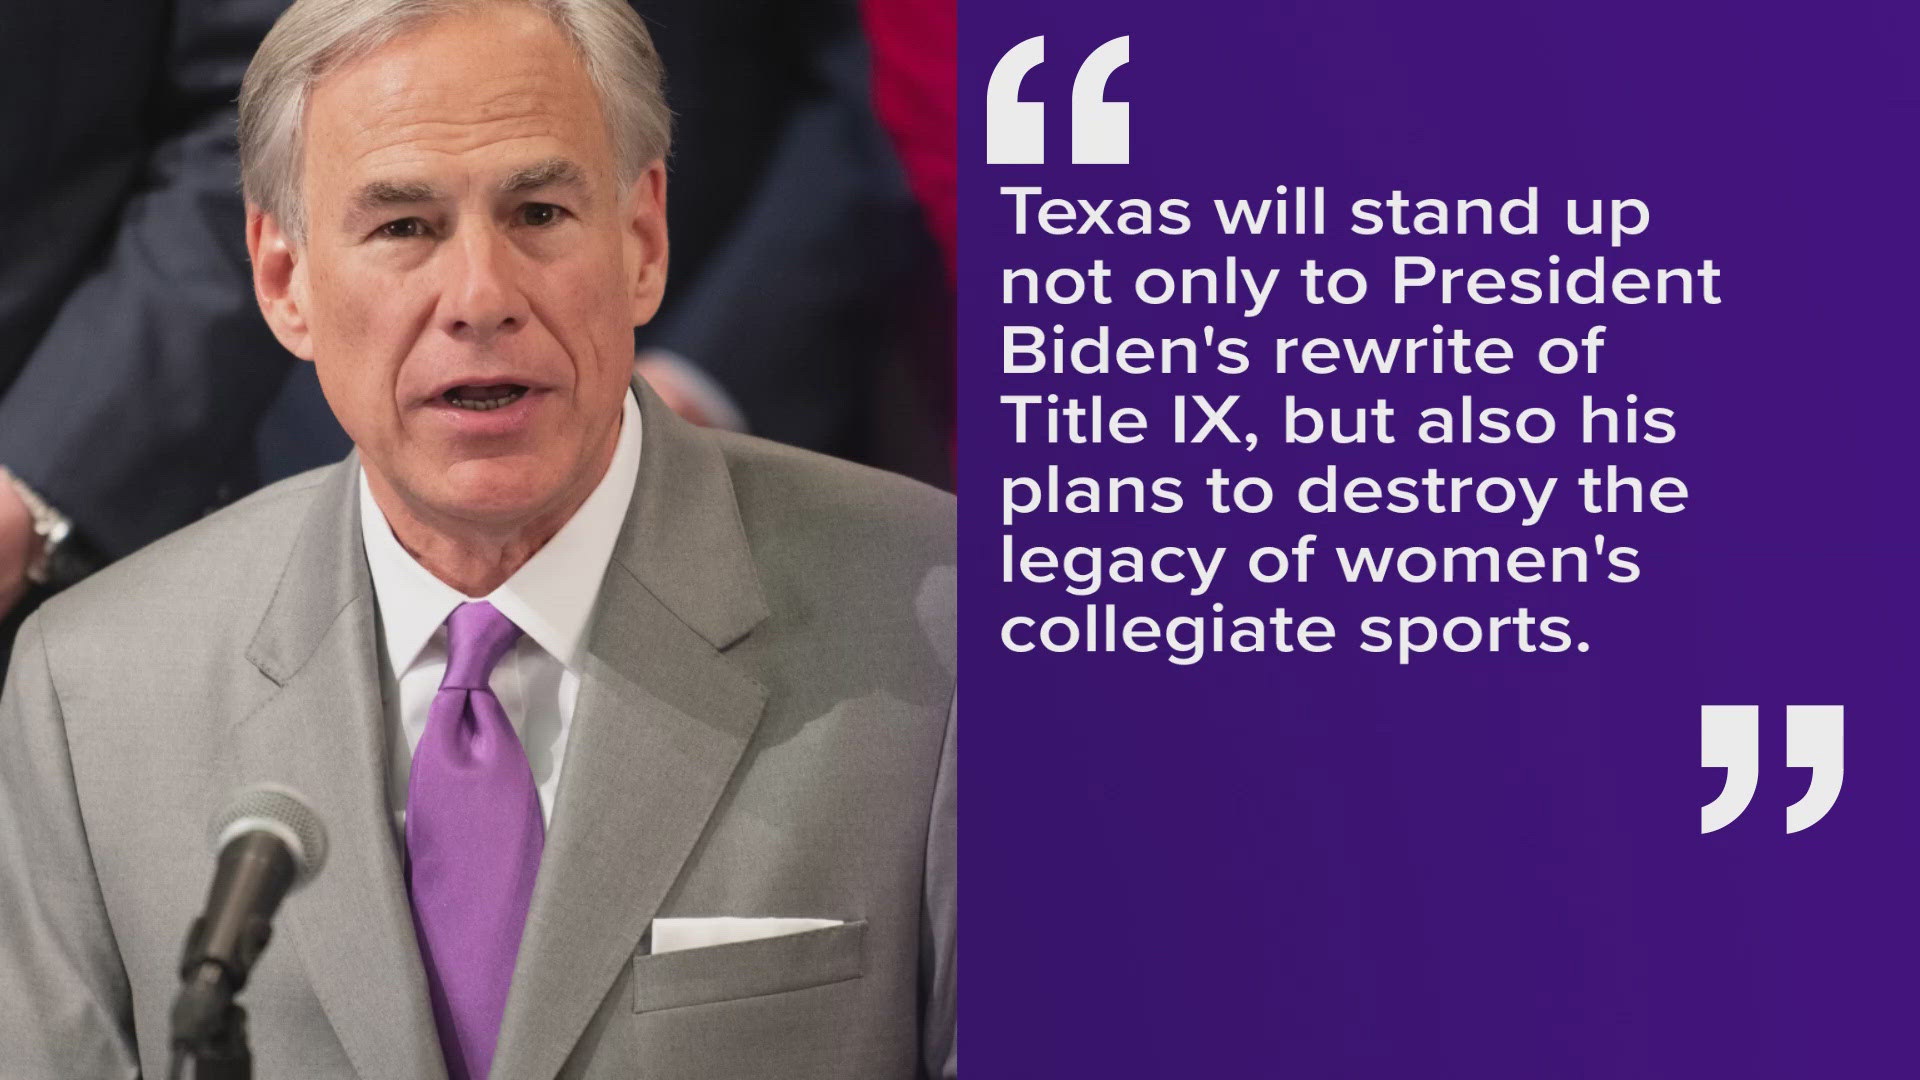 Gov. Greg Abbott is telling public colleges and universities in Texas to ignore President Joe Biden's Title IX rewrite.